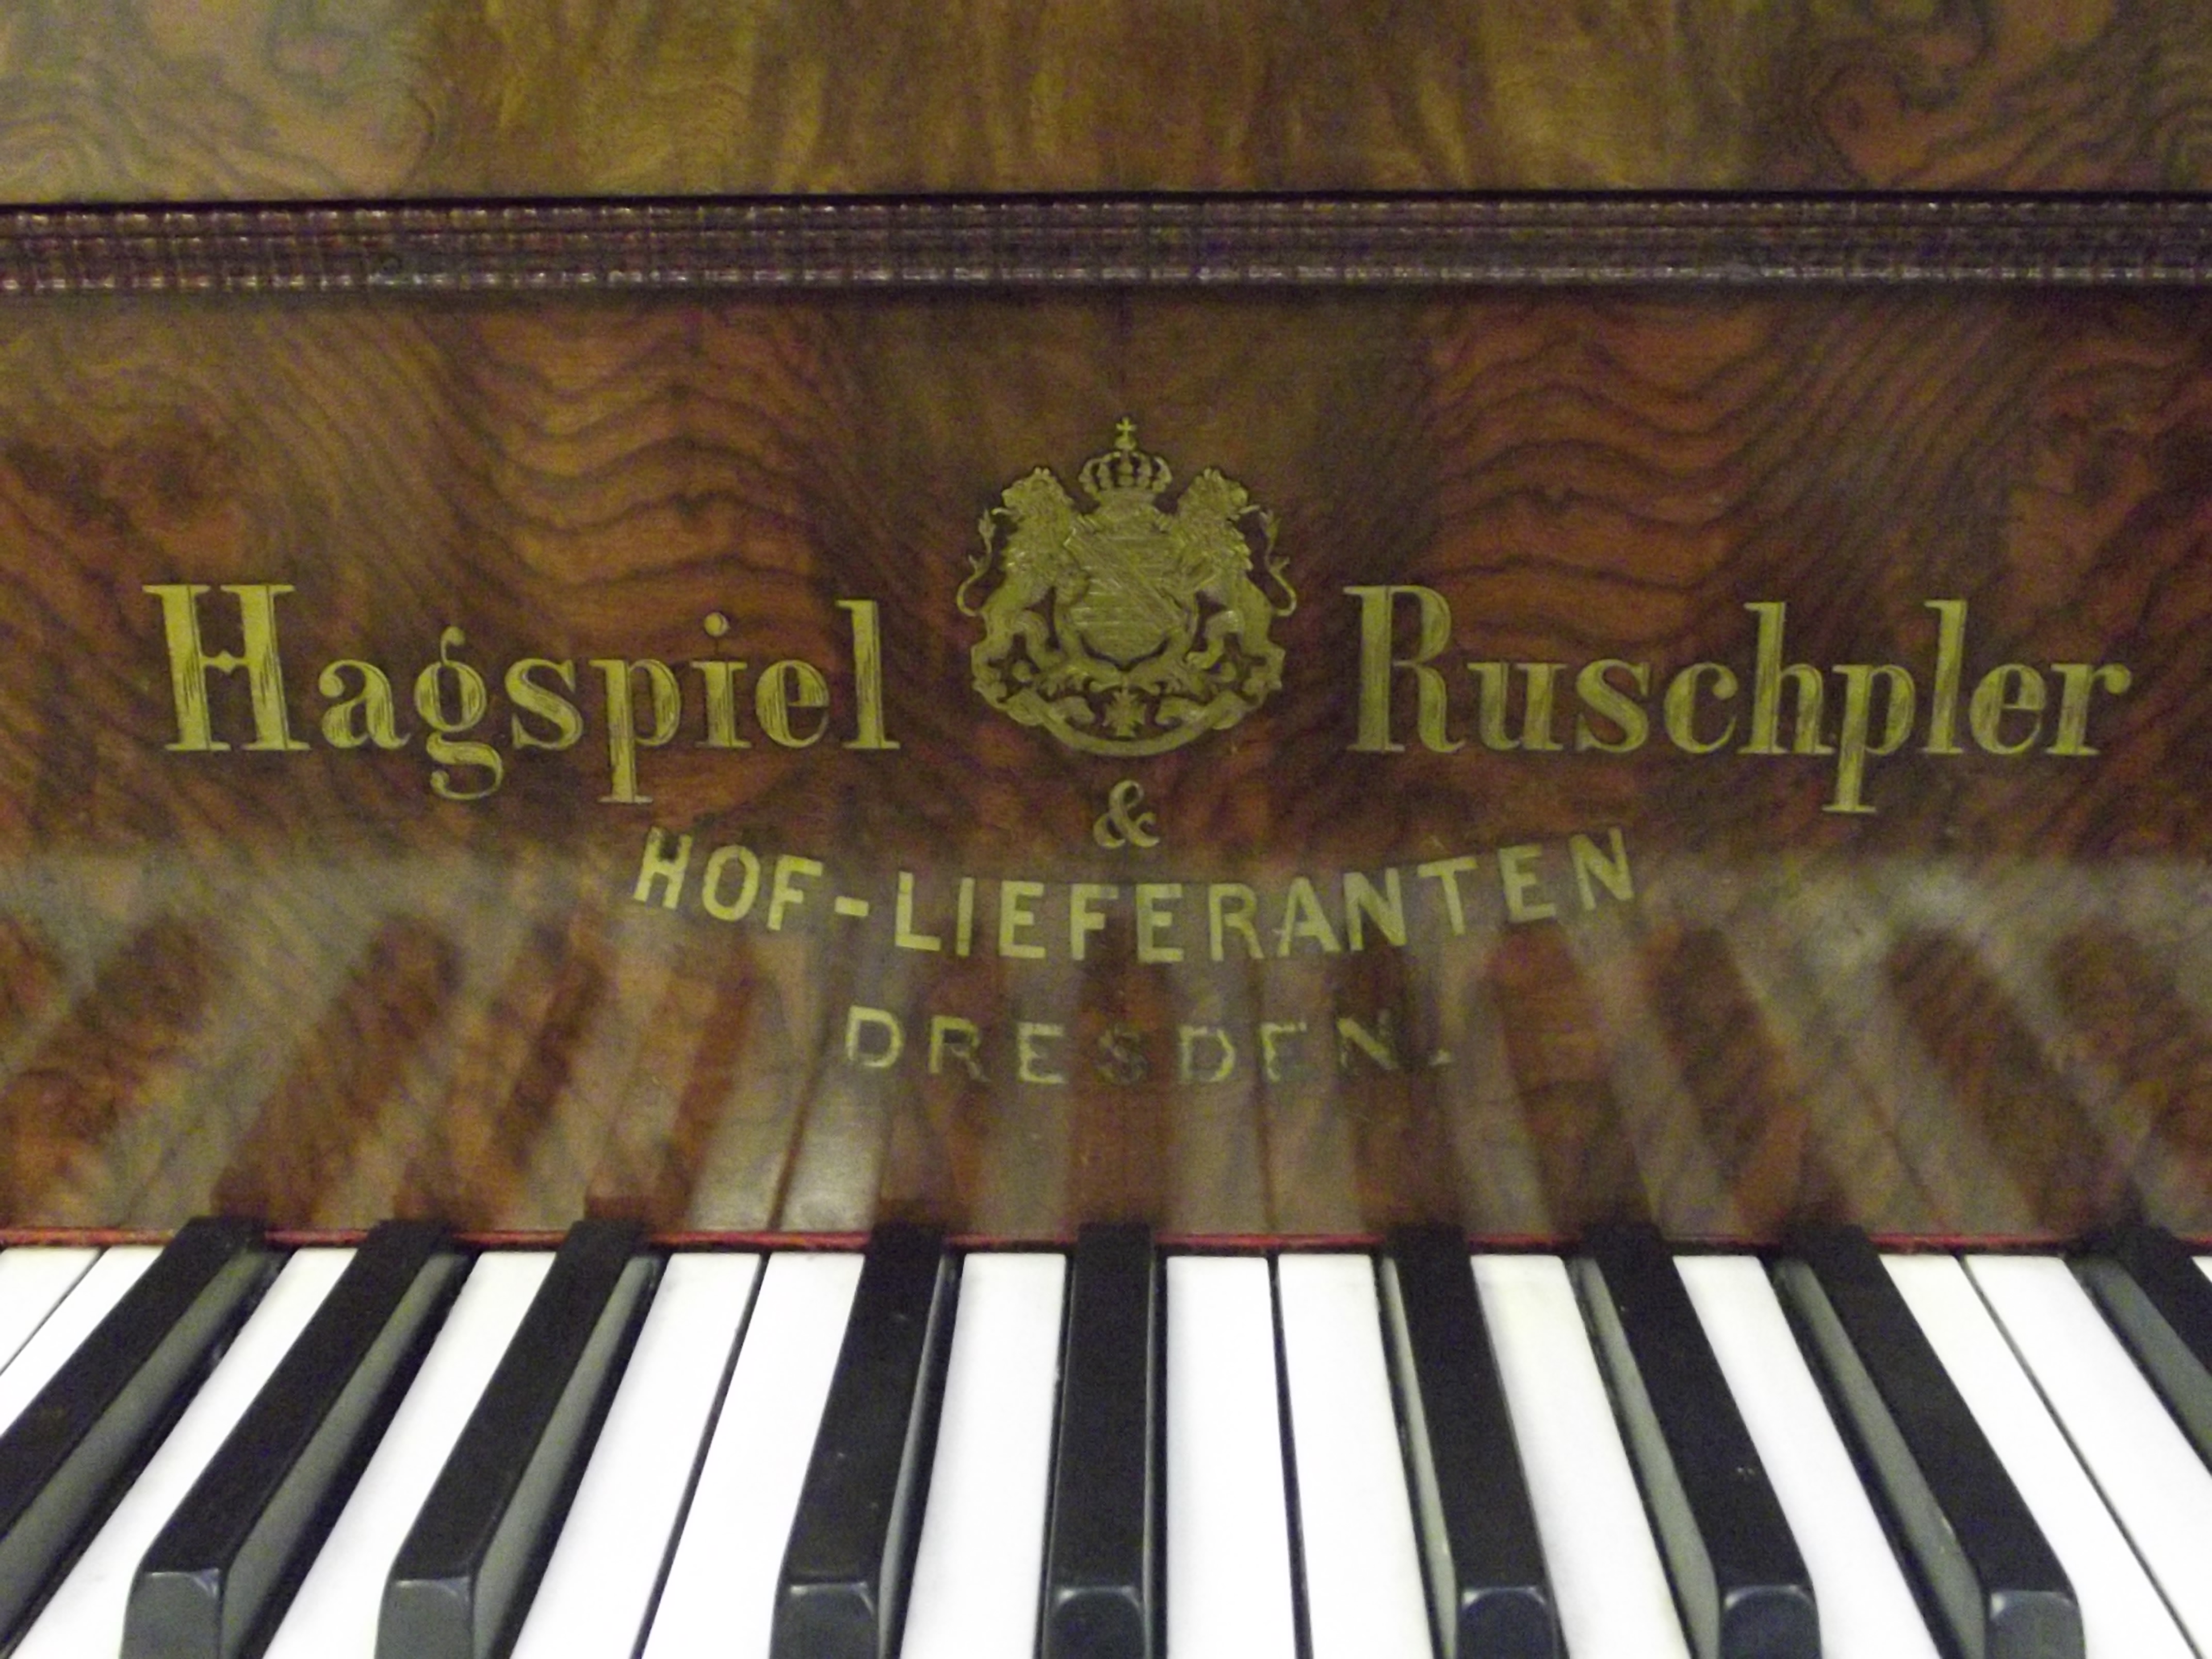 Hagspiel Ruschpler & Hof-Lieferanten Dresden walnut baby grand piano. Length 176 cm, width 137cm - Image 9 of 14